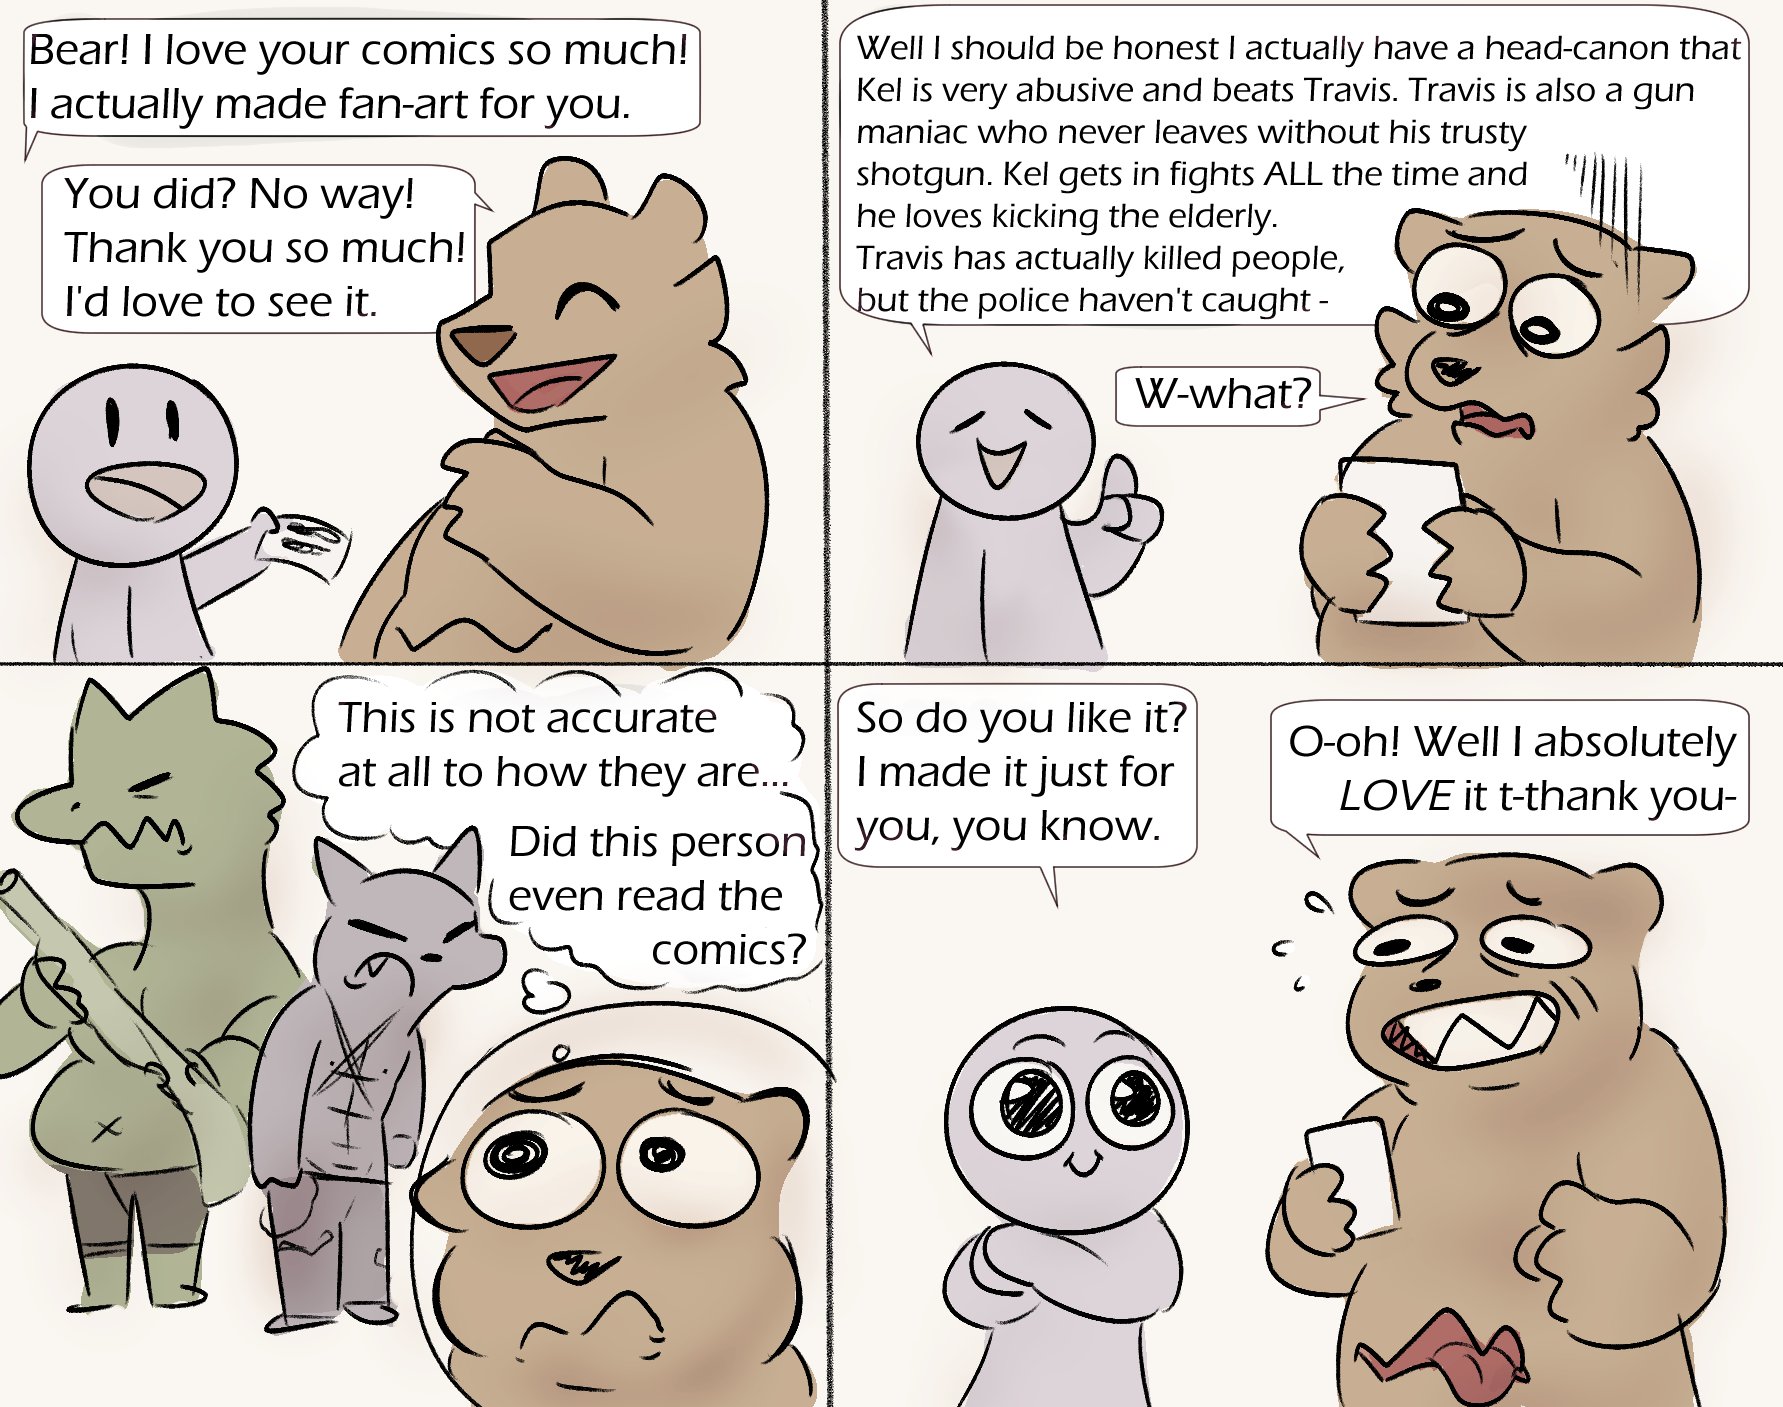 BEAR* Comic Studio - make comics & memes with BEAR* characters